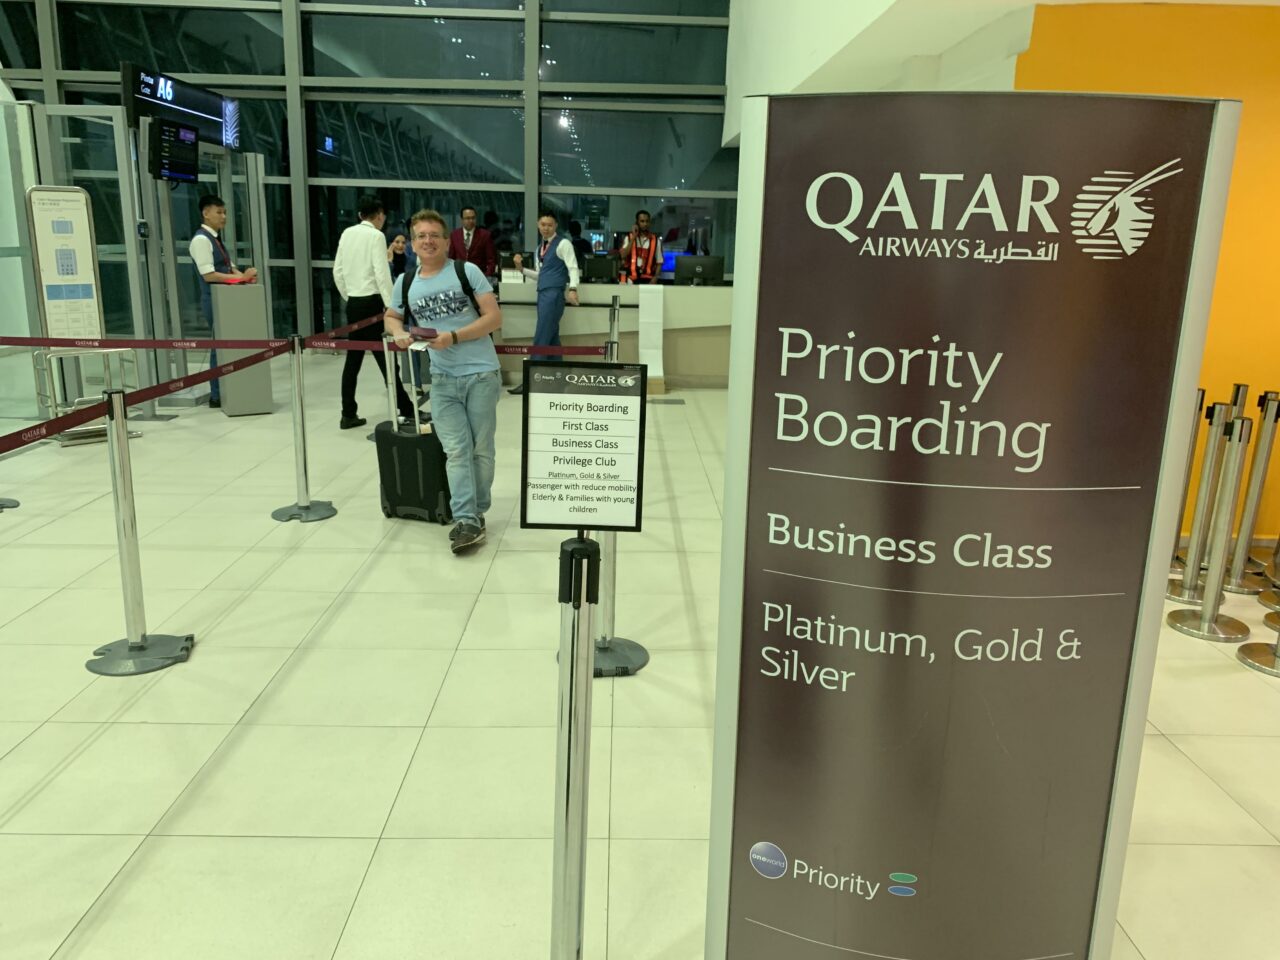 A330 qatar business class review boarding gate Penang